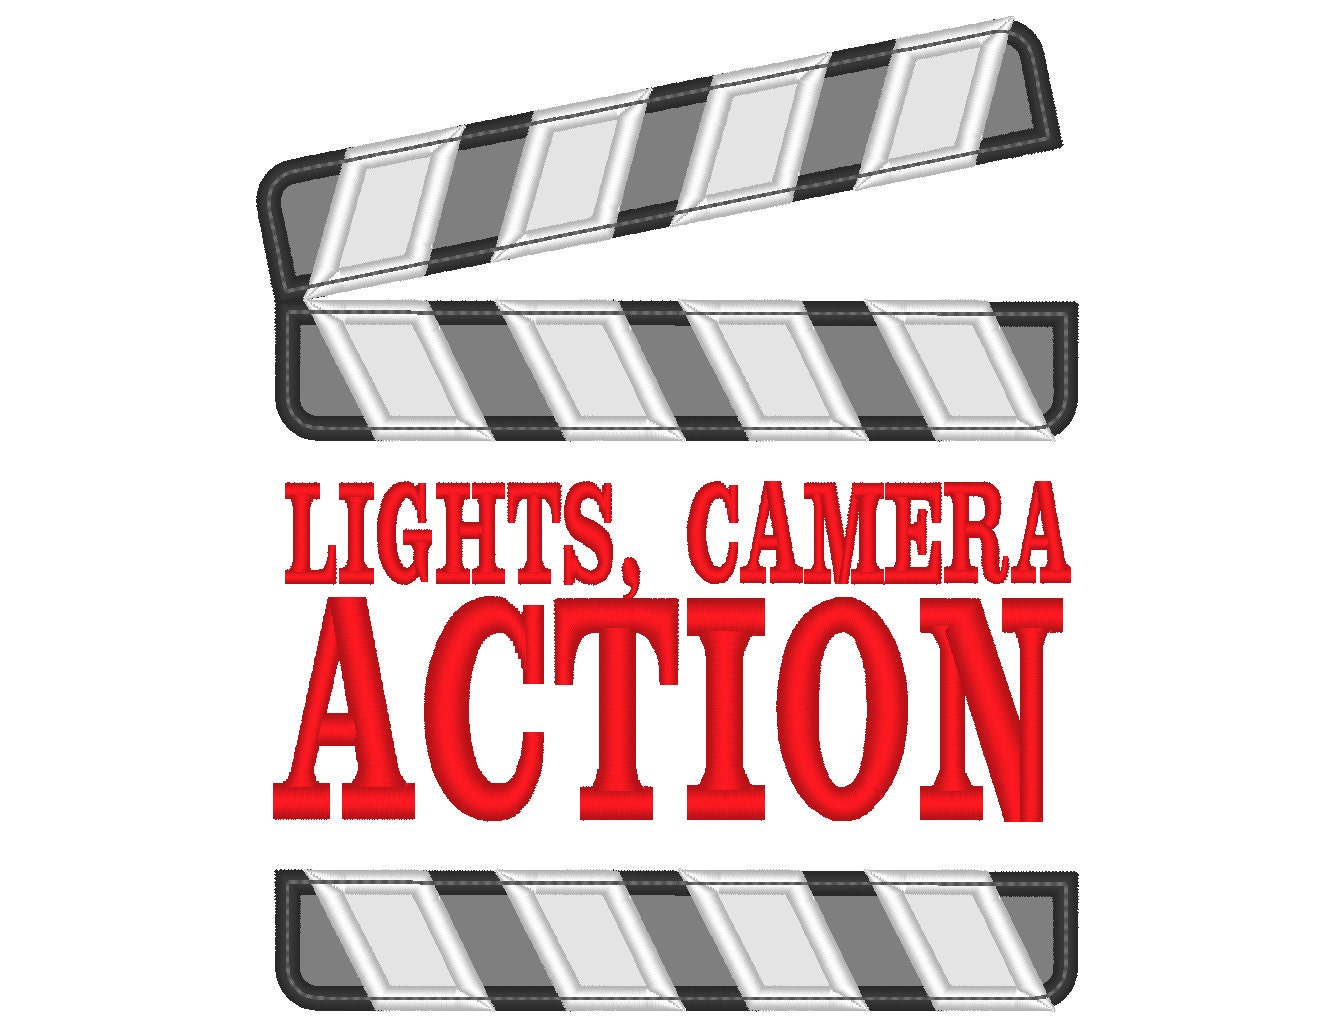 Lights, camera, action!